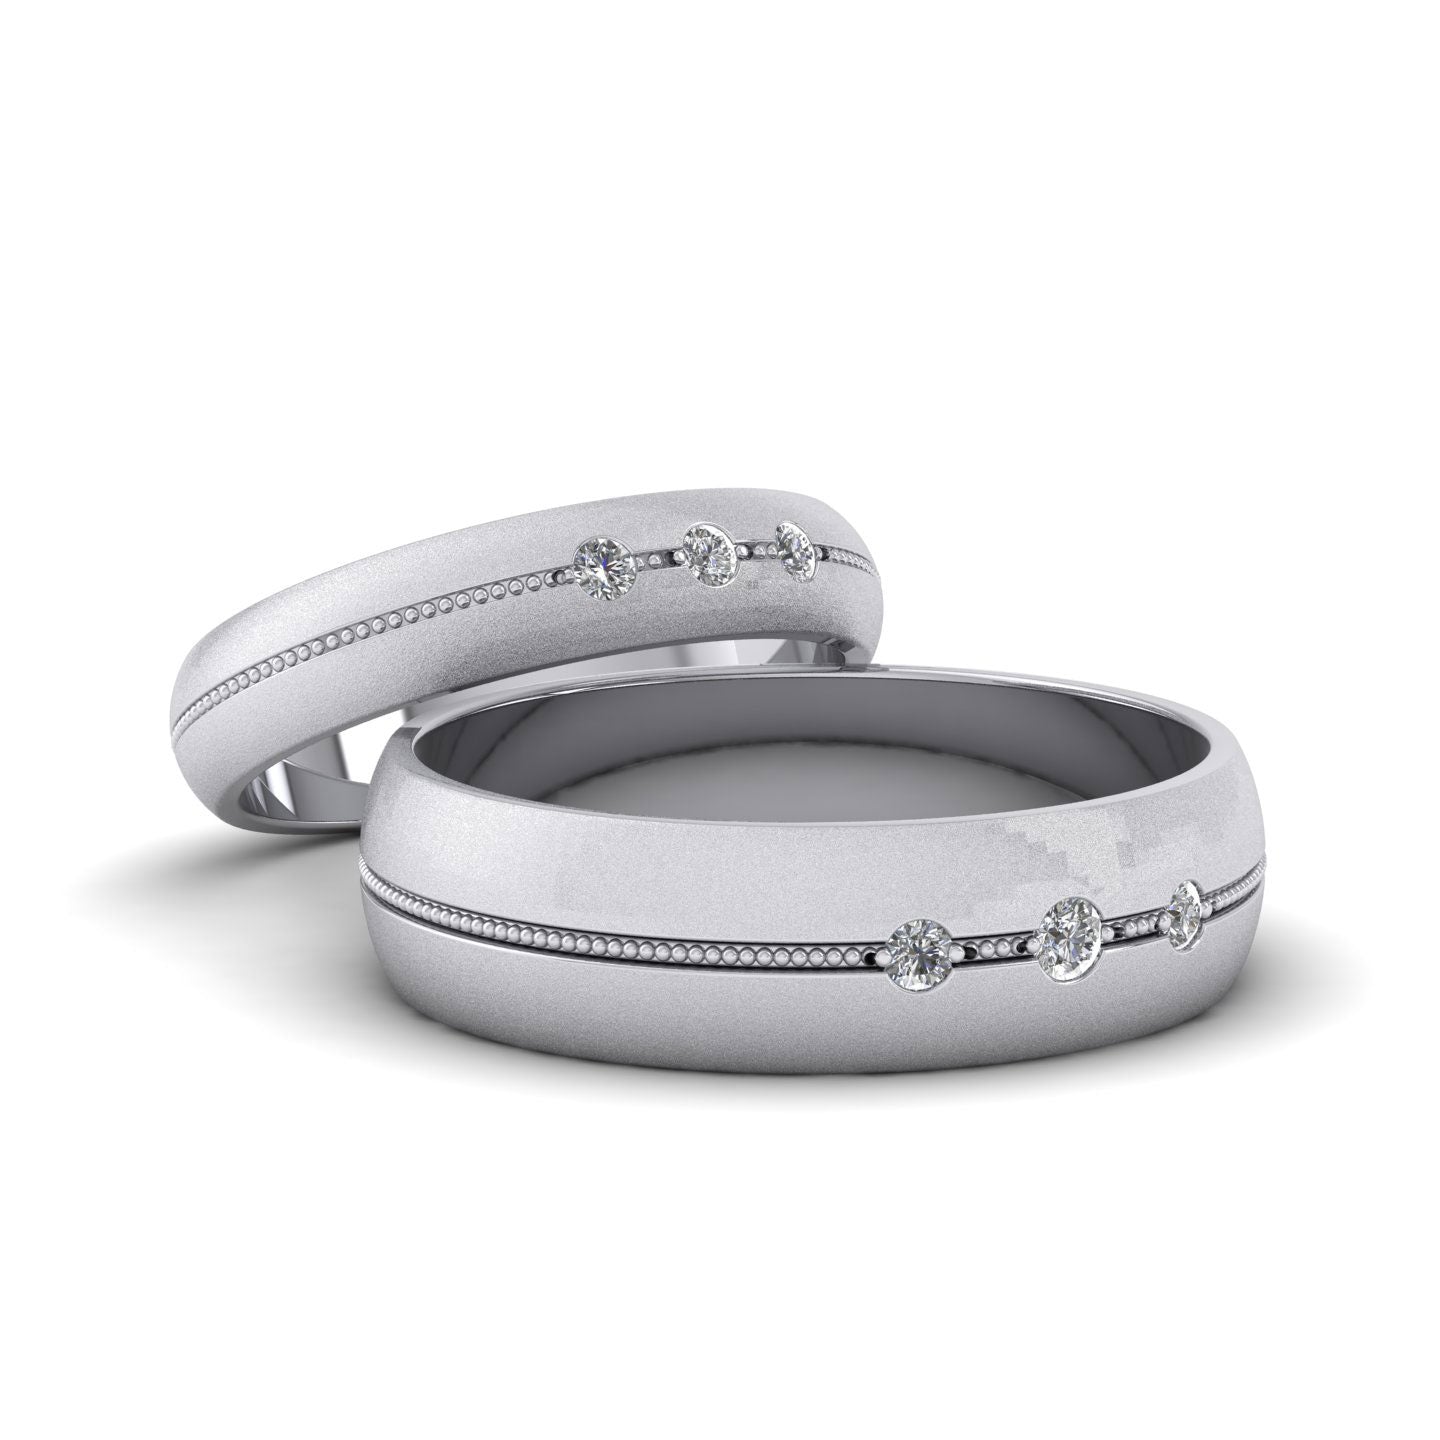 Three Diamond And Centre Millgrain Pattern 18ct White Gold 6mm Wedding Ring